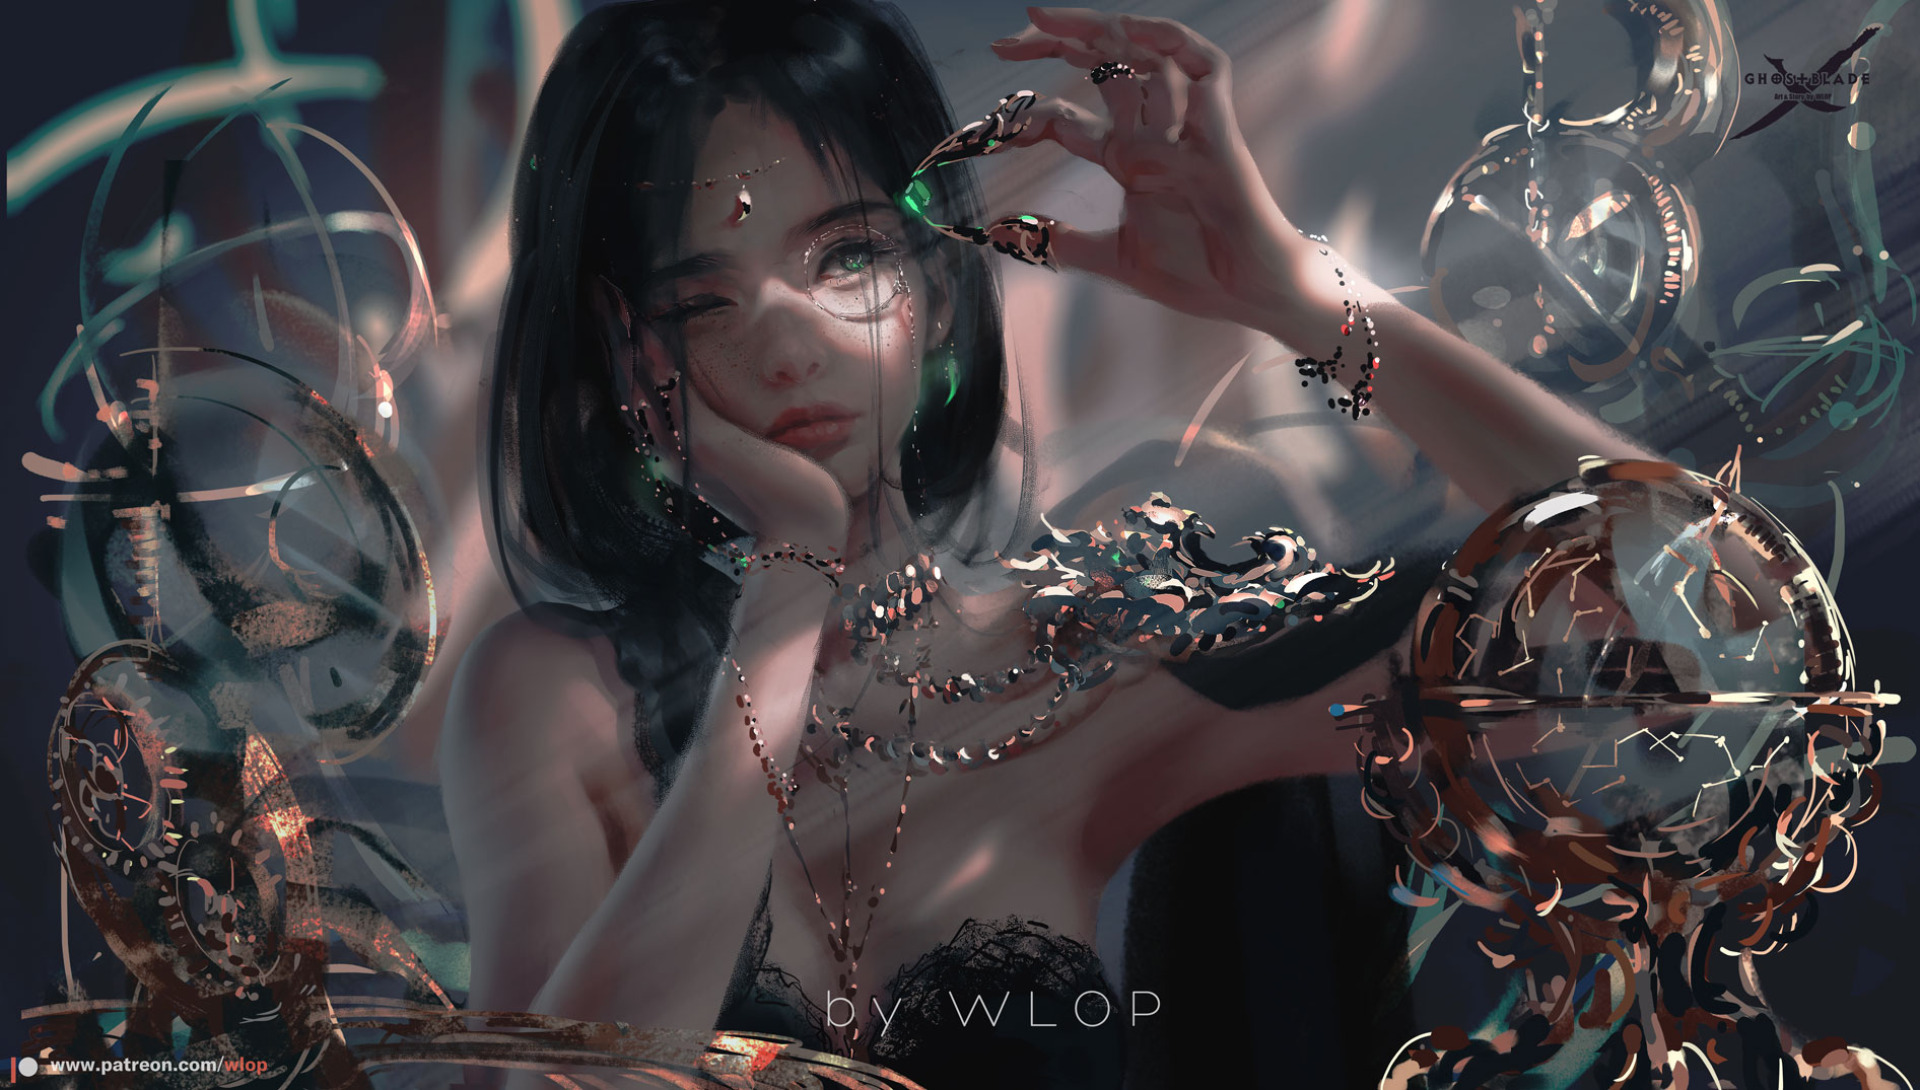 Jewel by Wang Ling